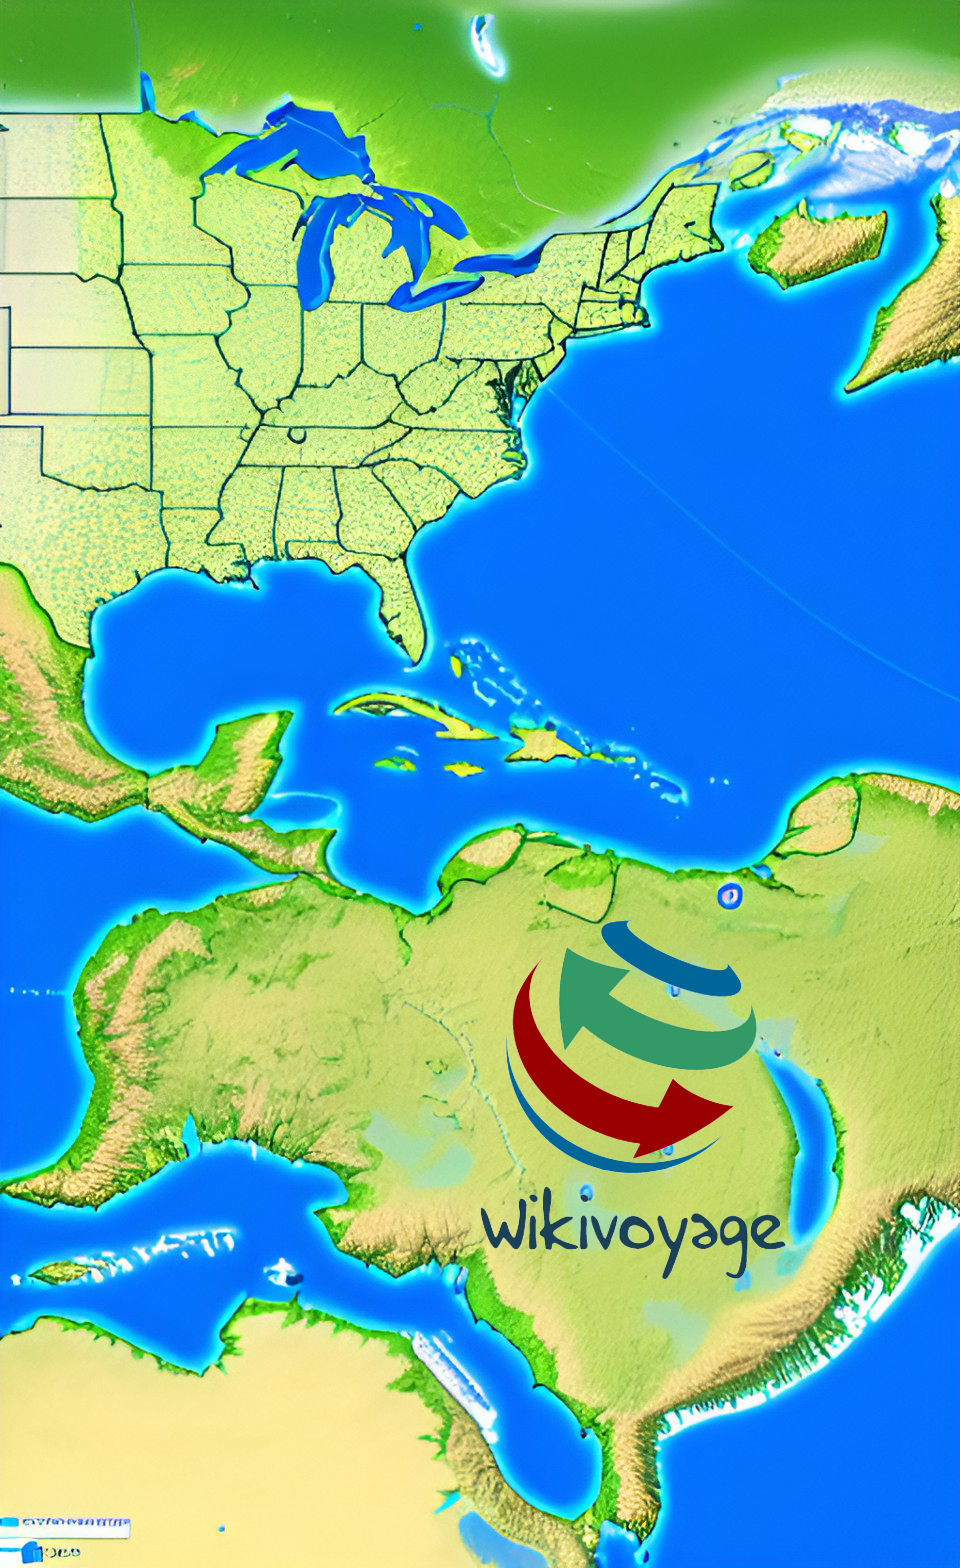 Wikivoyage (арт изображение)